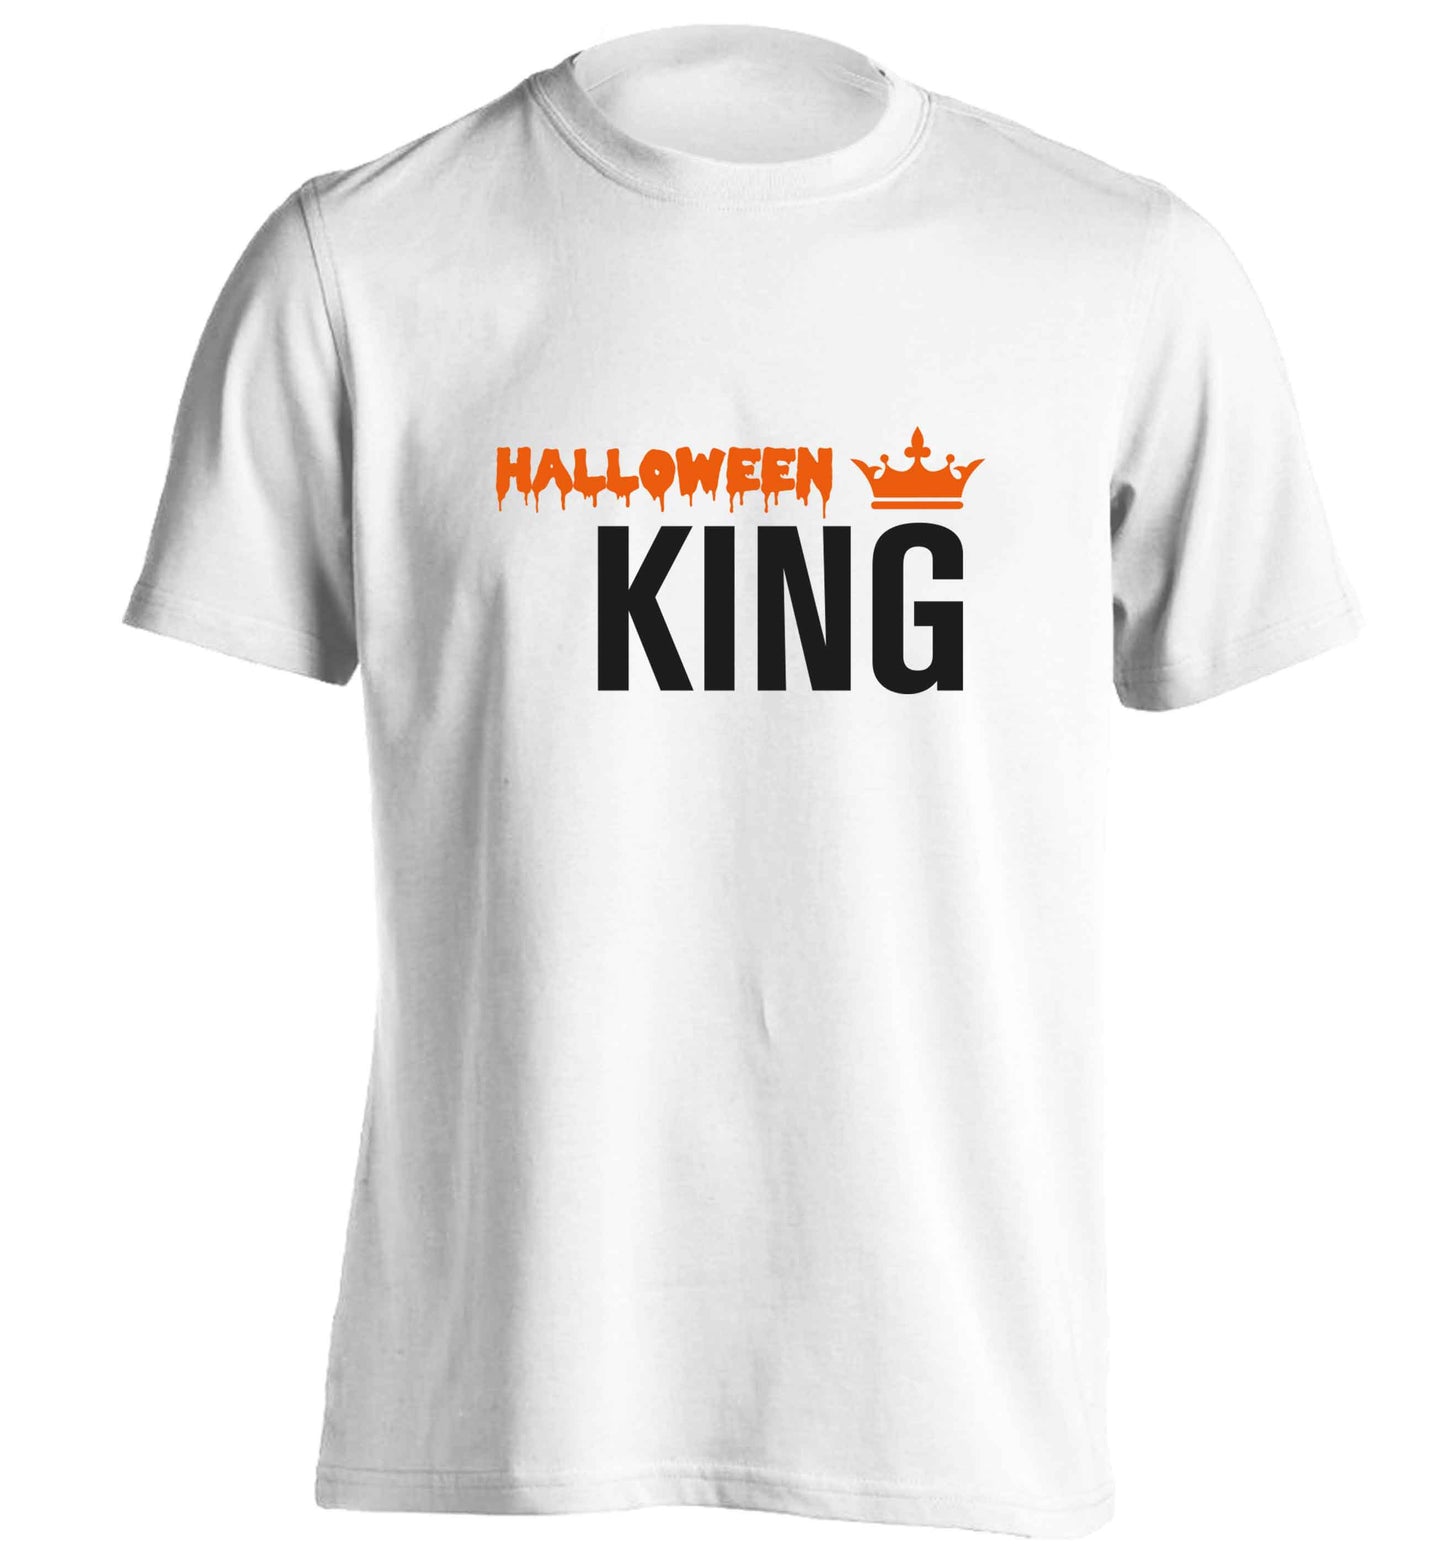 Halloween king adults unisex white Tshirt 2XL